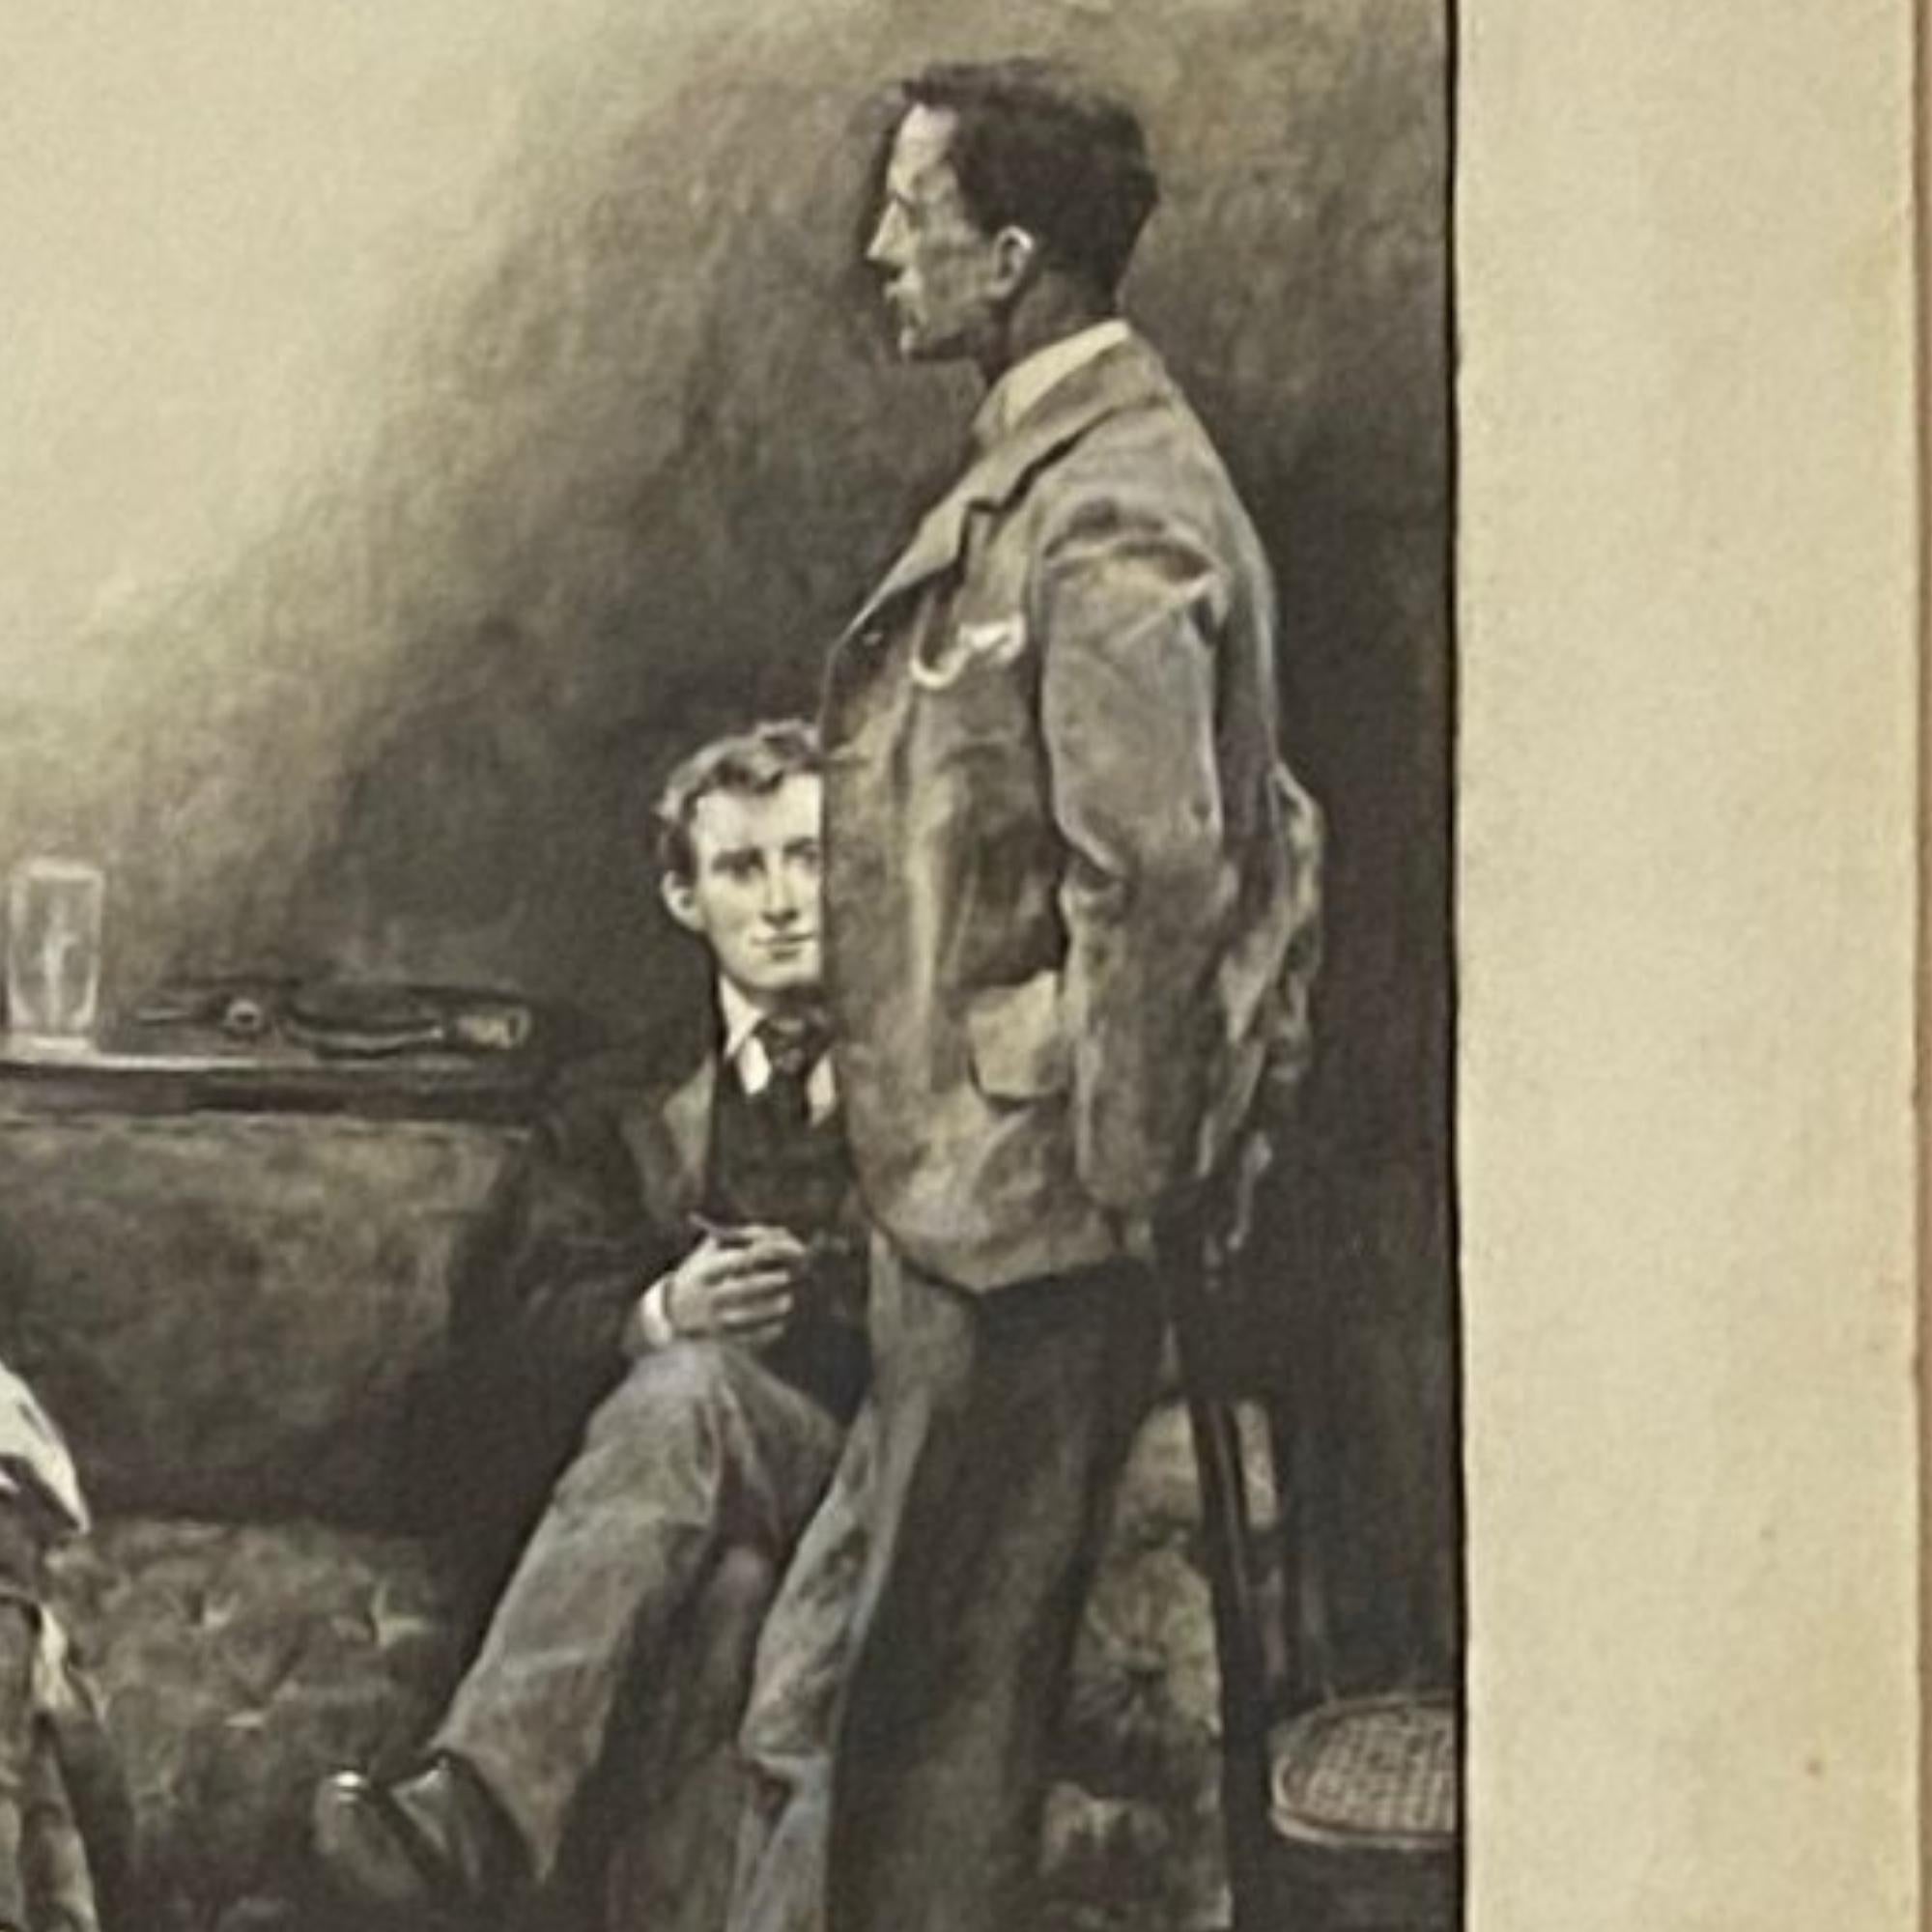 Three Gentlemen Conversing Watercolour Painting - Harold&Charles